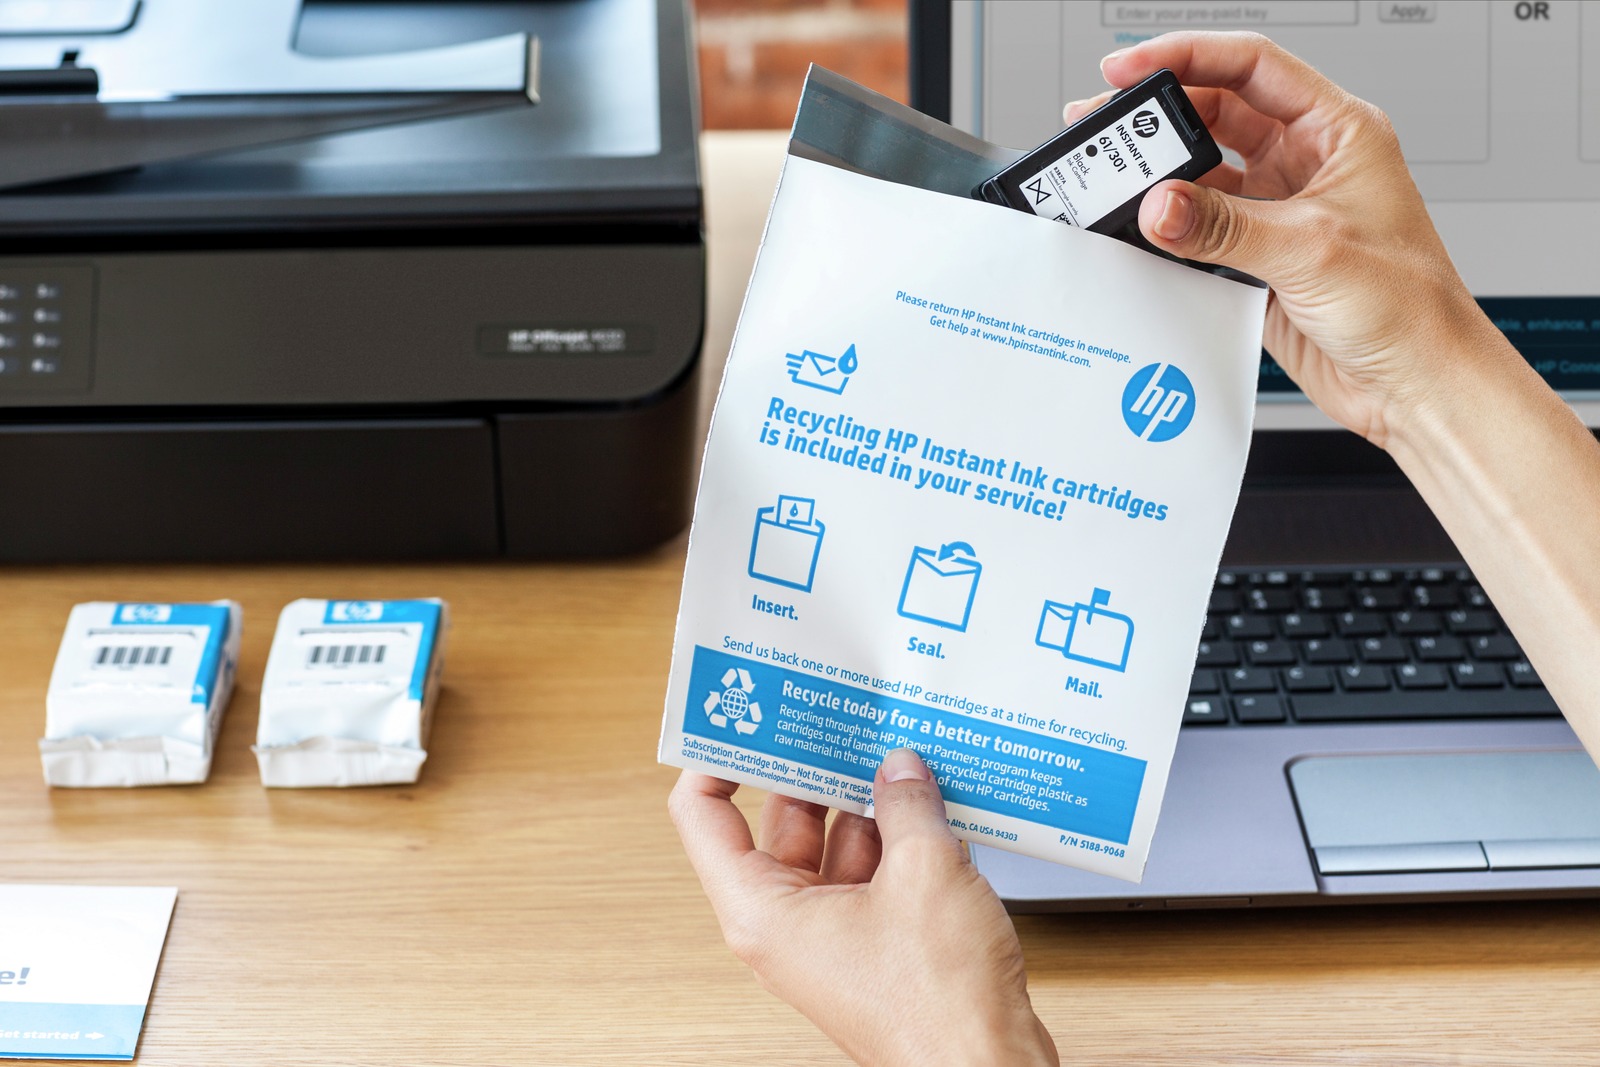 10 ways to save big on printer ink and toner – HP instant ink envelope mailer